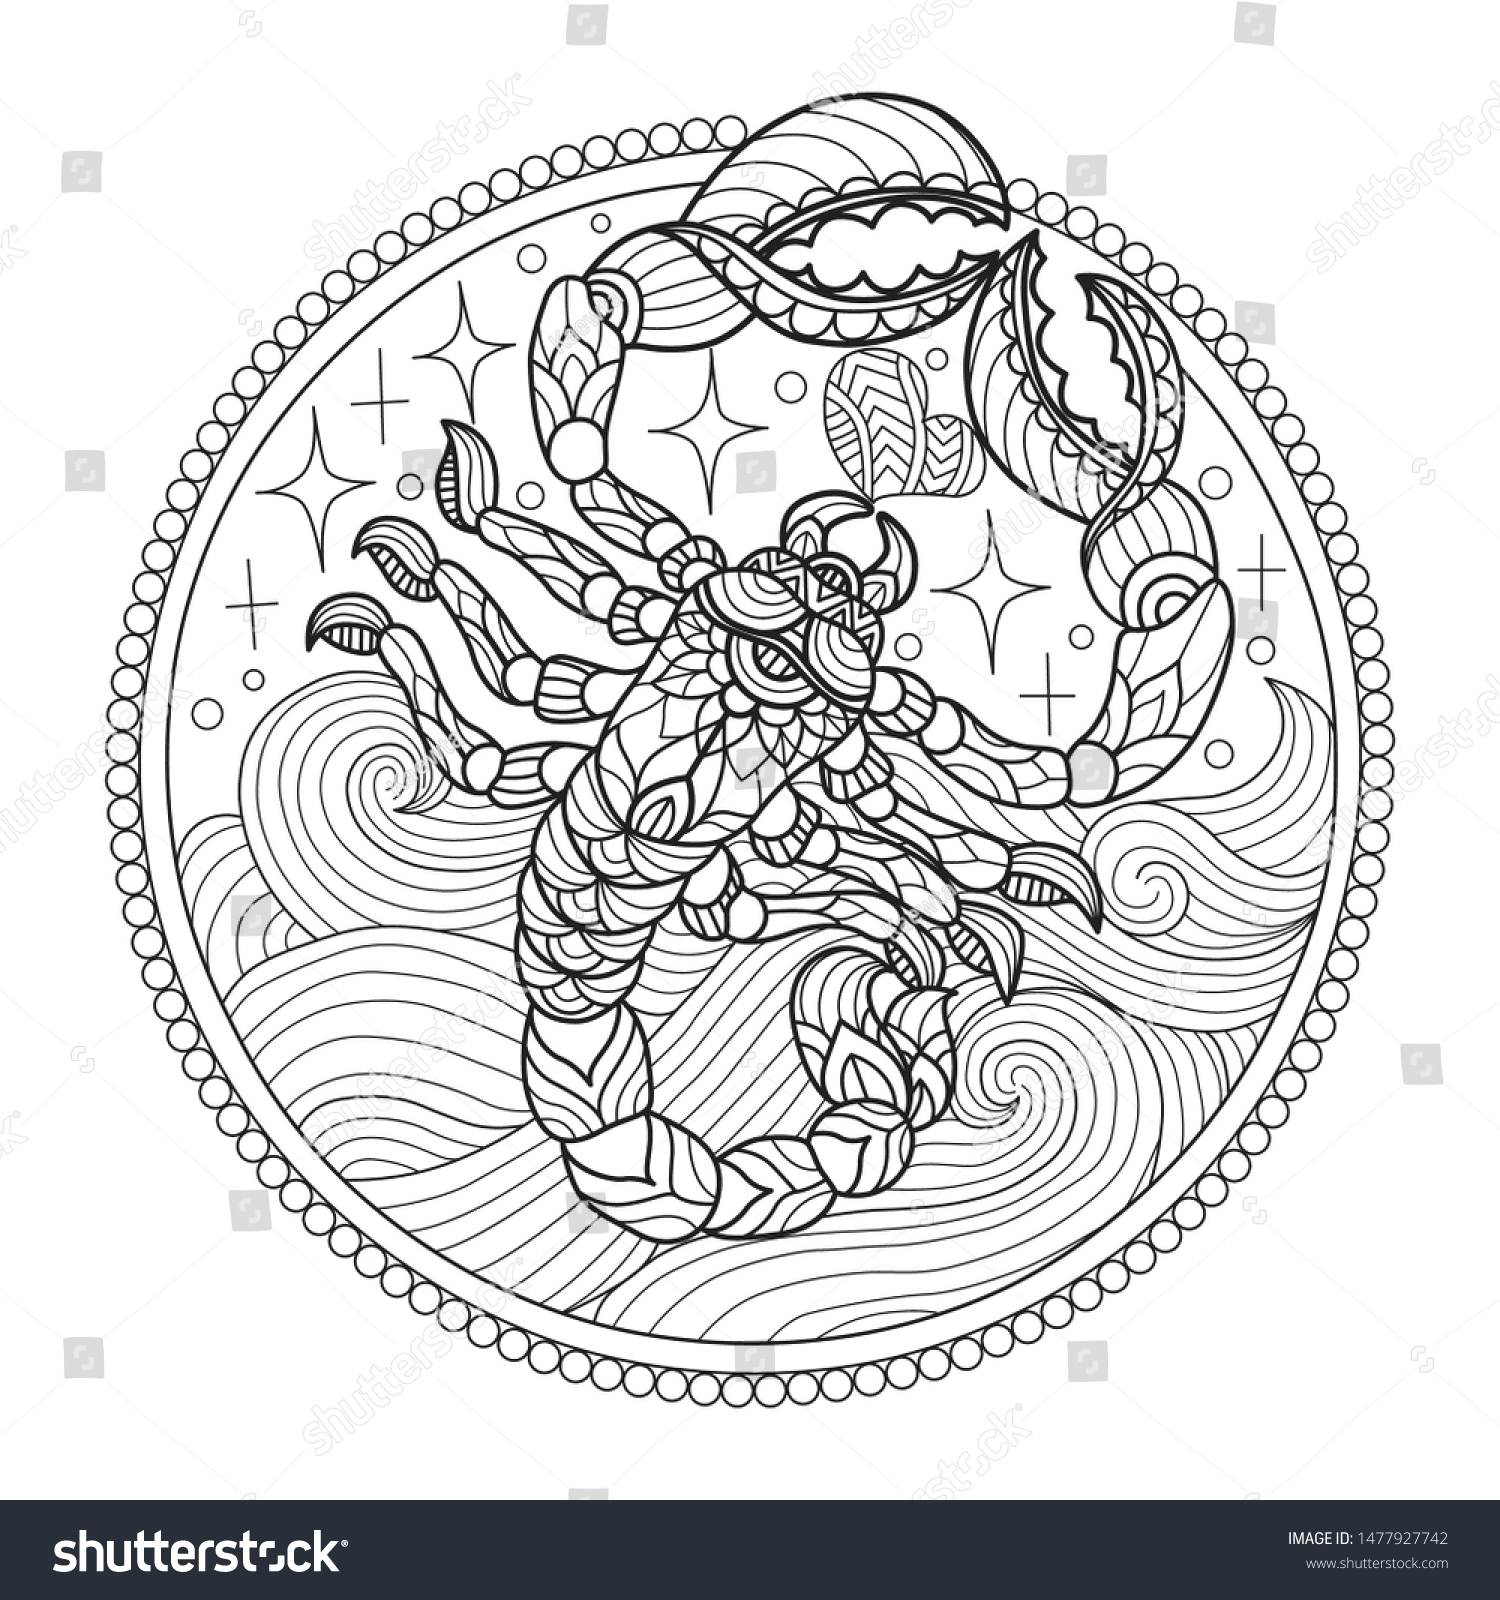 Hand drawn sketch illustration scorpion adult stock vector royalty free